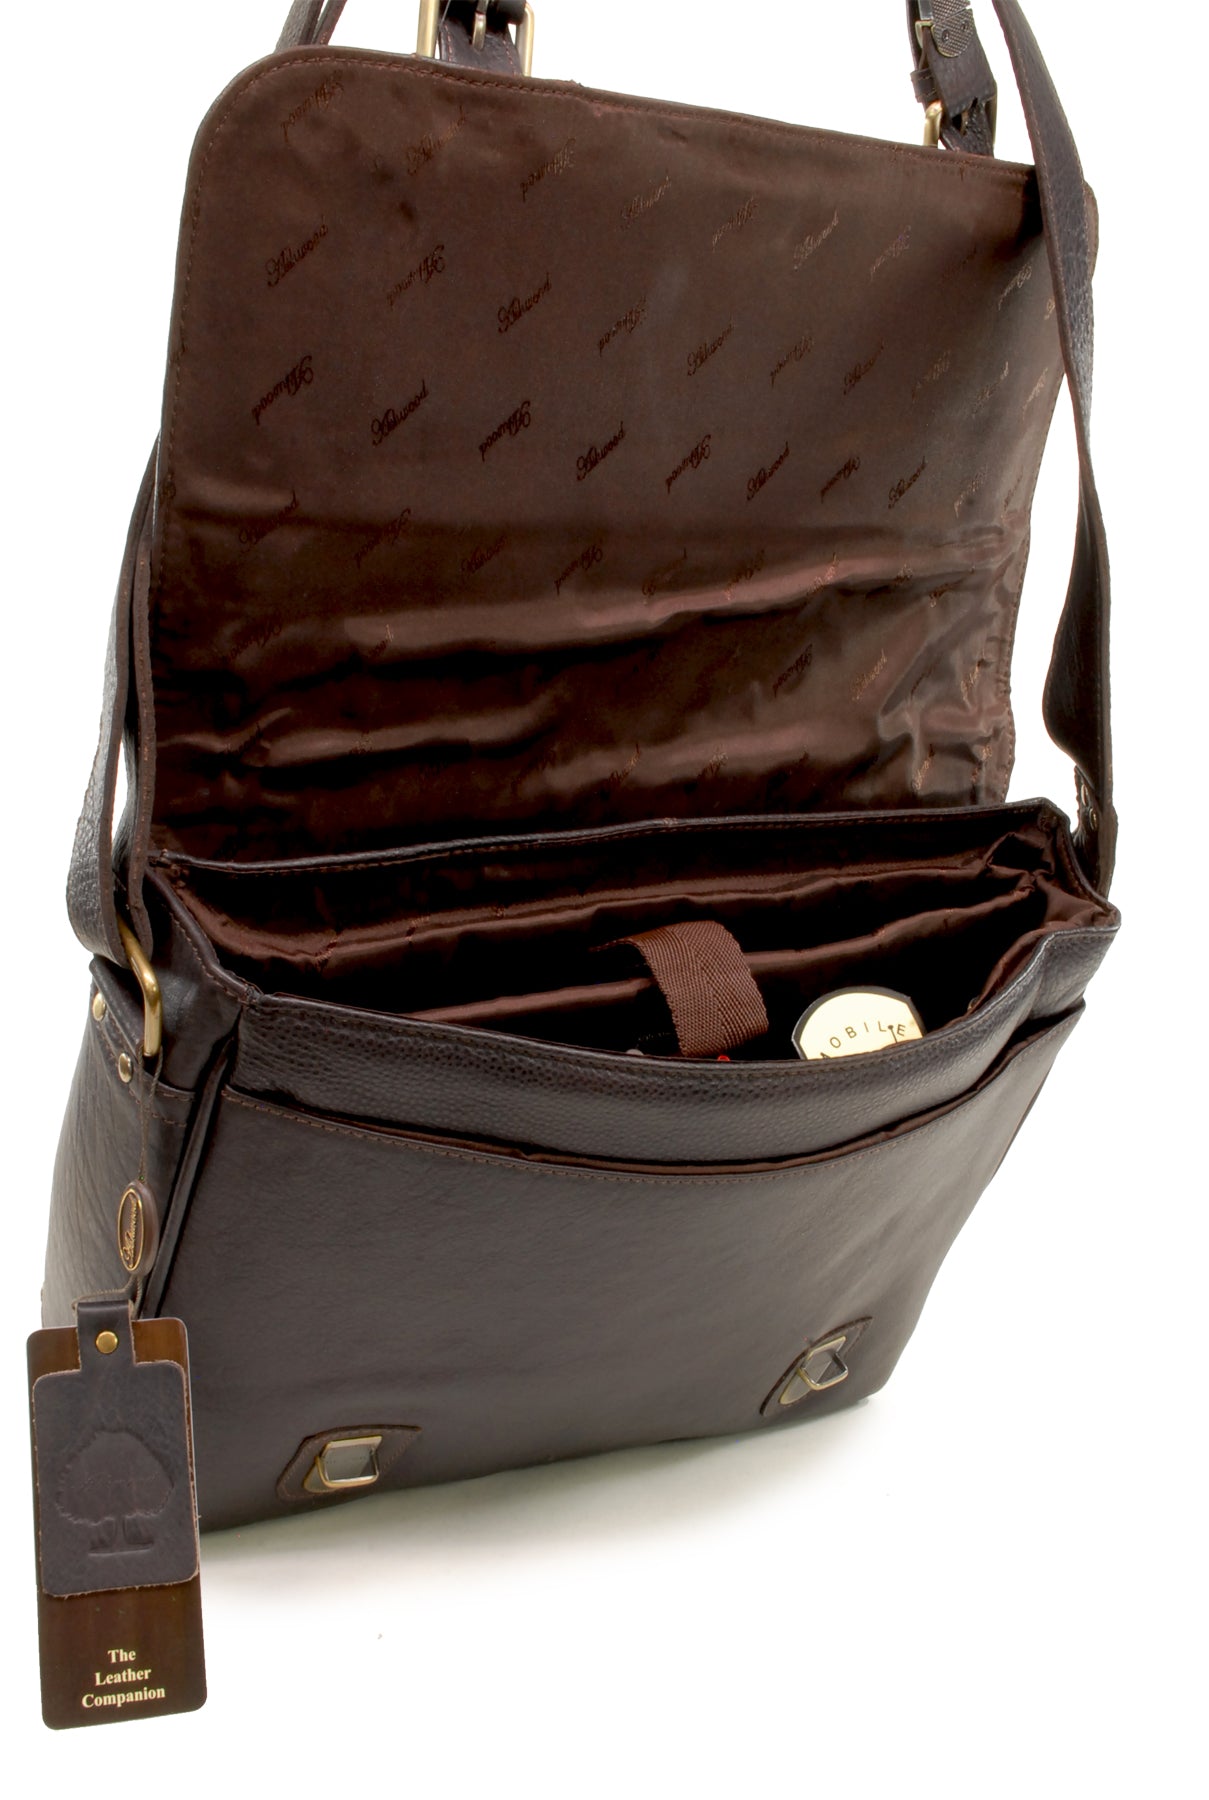 Ashwood Leather Mens Monti Medium Messenger Bag - Brown : :  Fashion